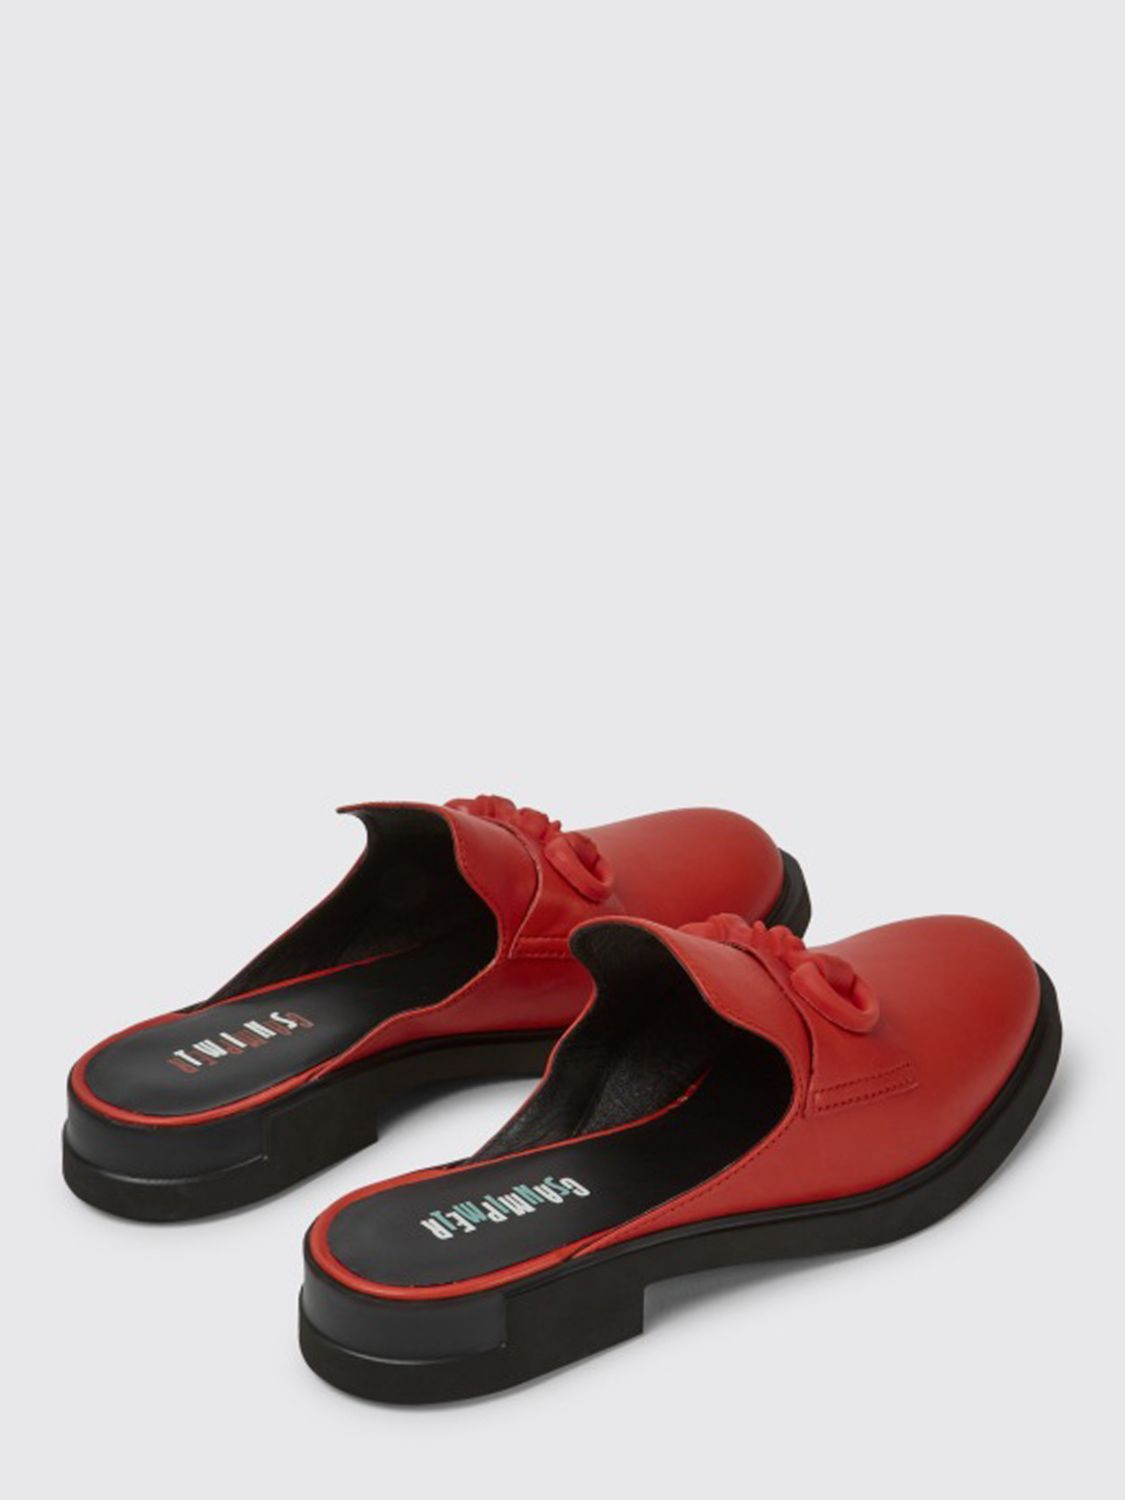 CAMPER: Twins leather sabots | Shoes Camper Women Red Flat Camper K201270-004 GIGLIO.COM